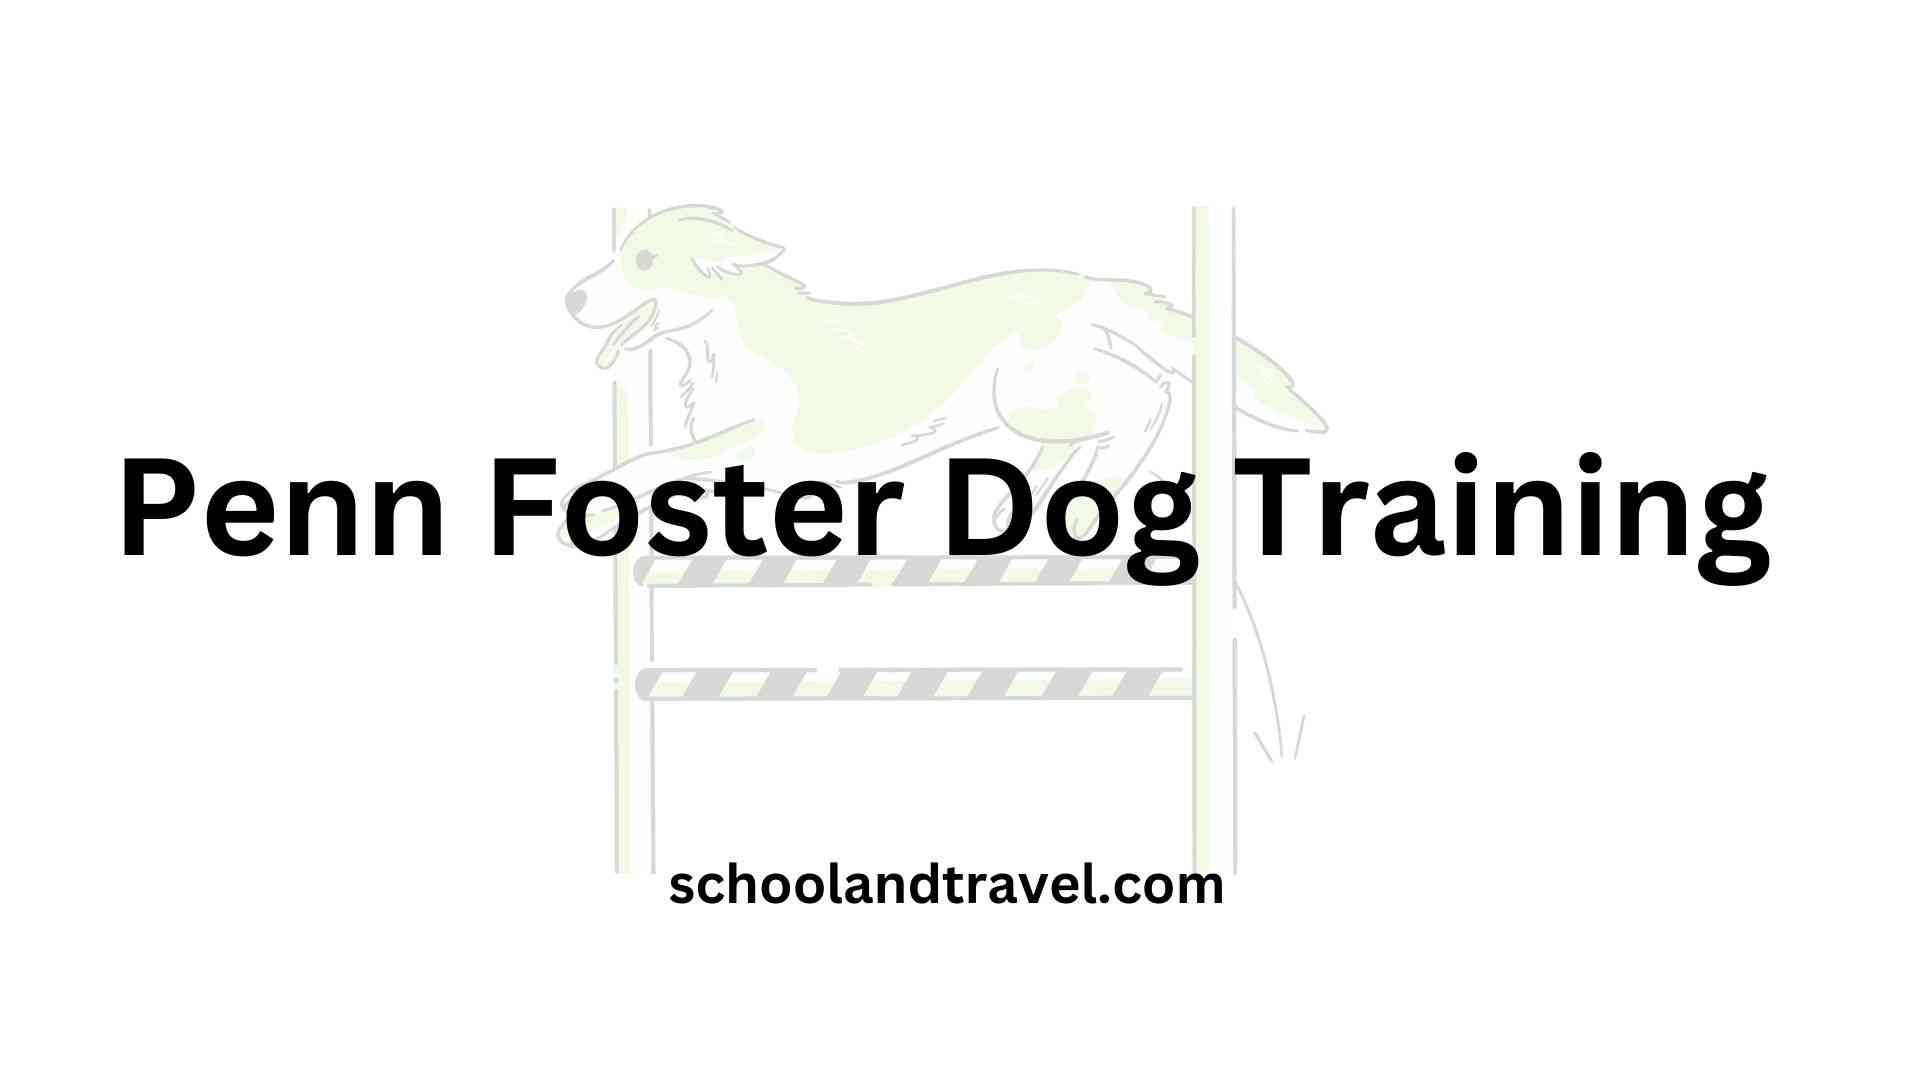 Penn Foster Dog Training